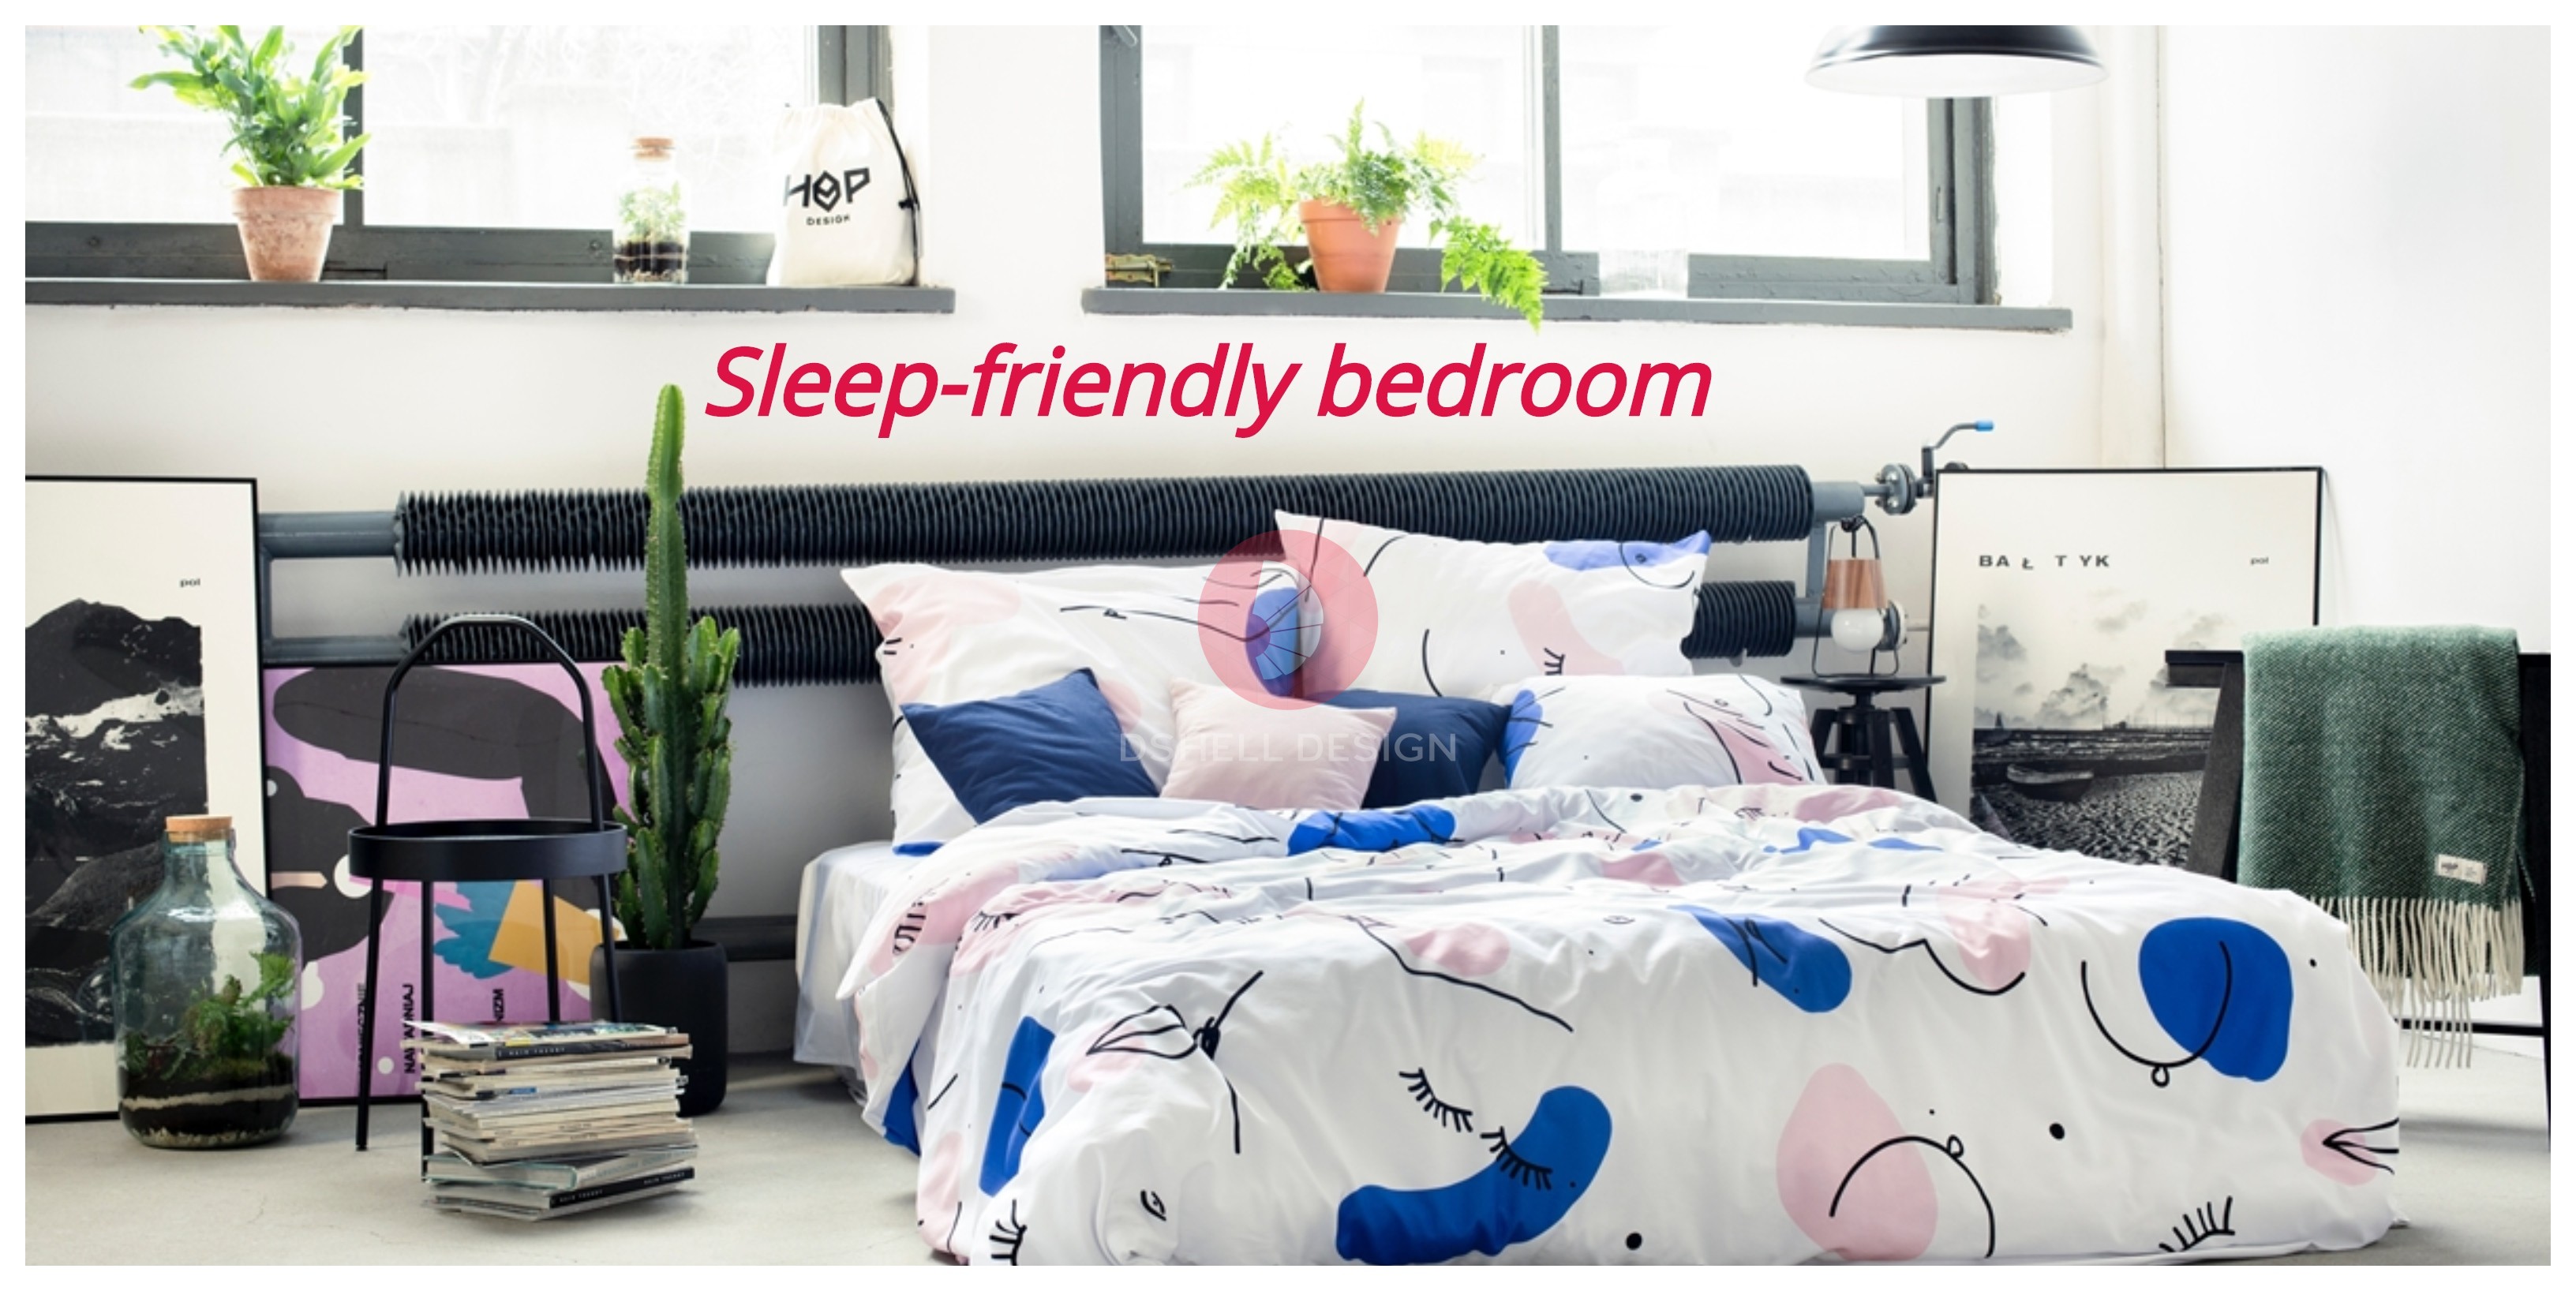 Sleep-friendly bedroom